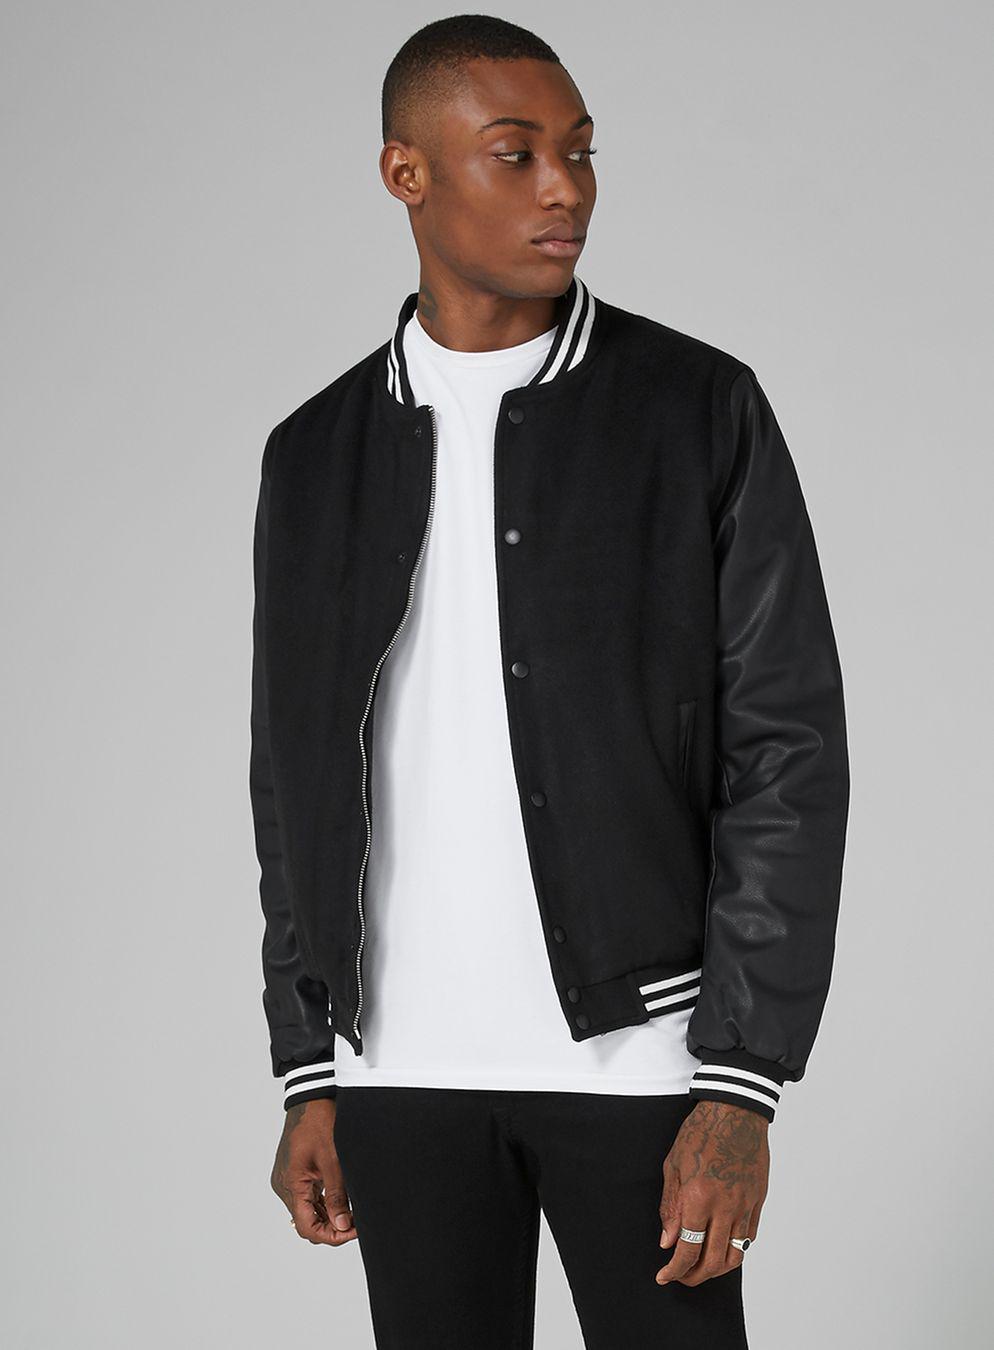 Lyst - Topman Black Varsity Jacket in Black for Men